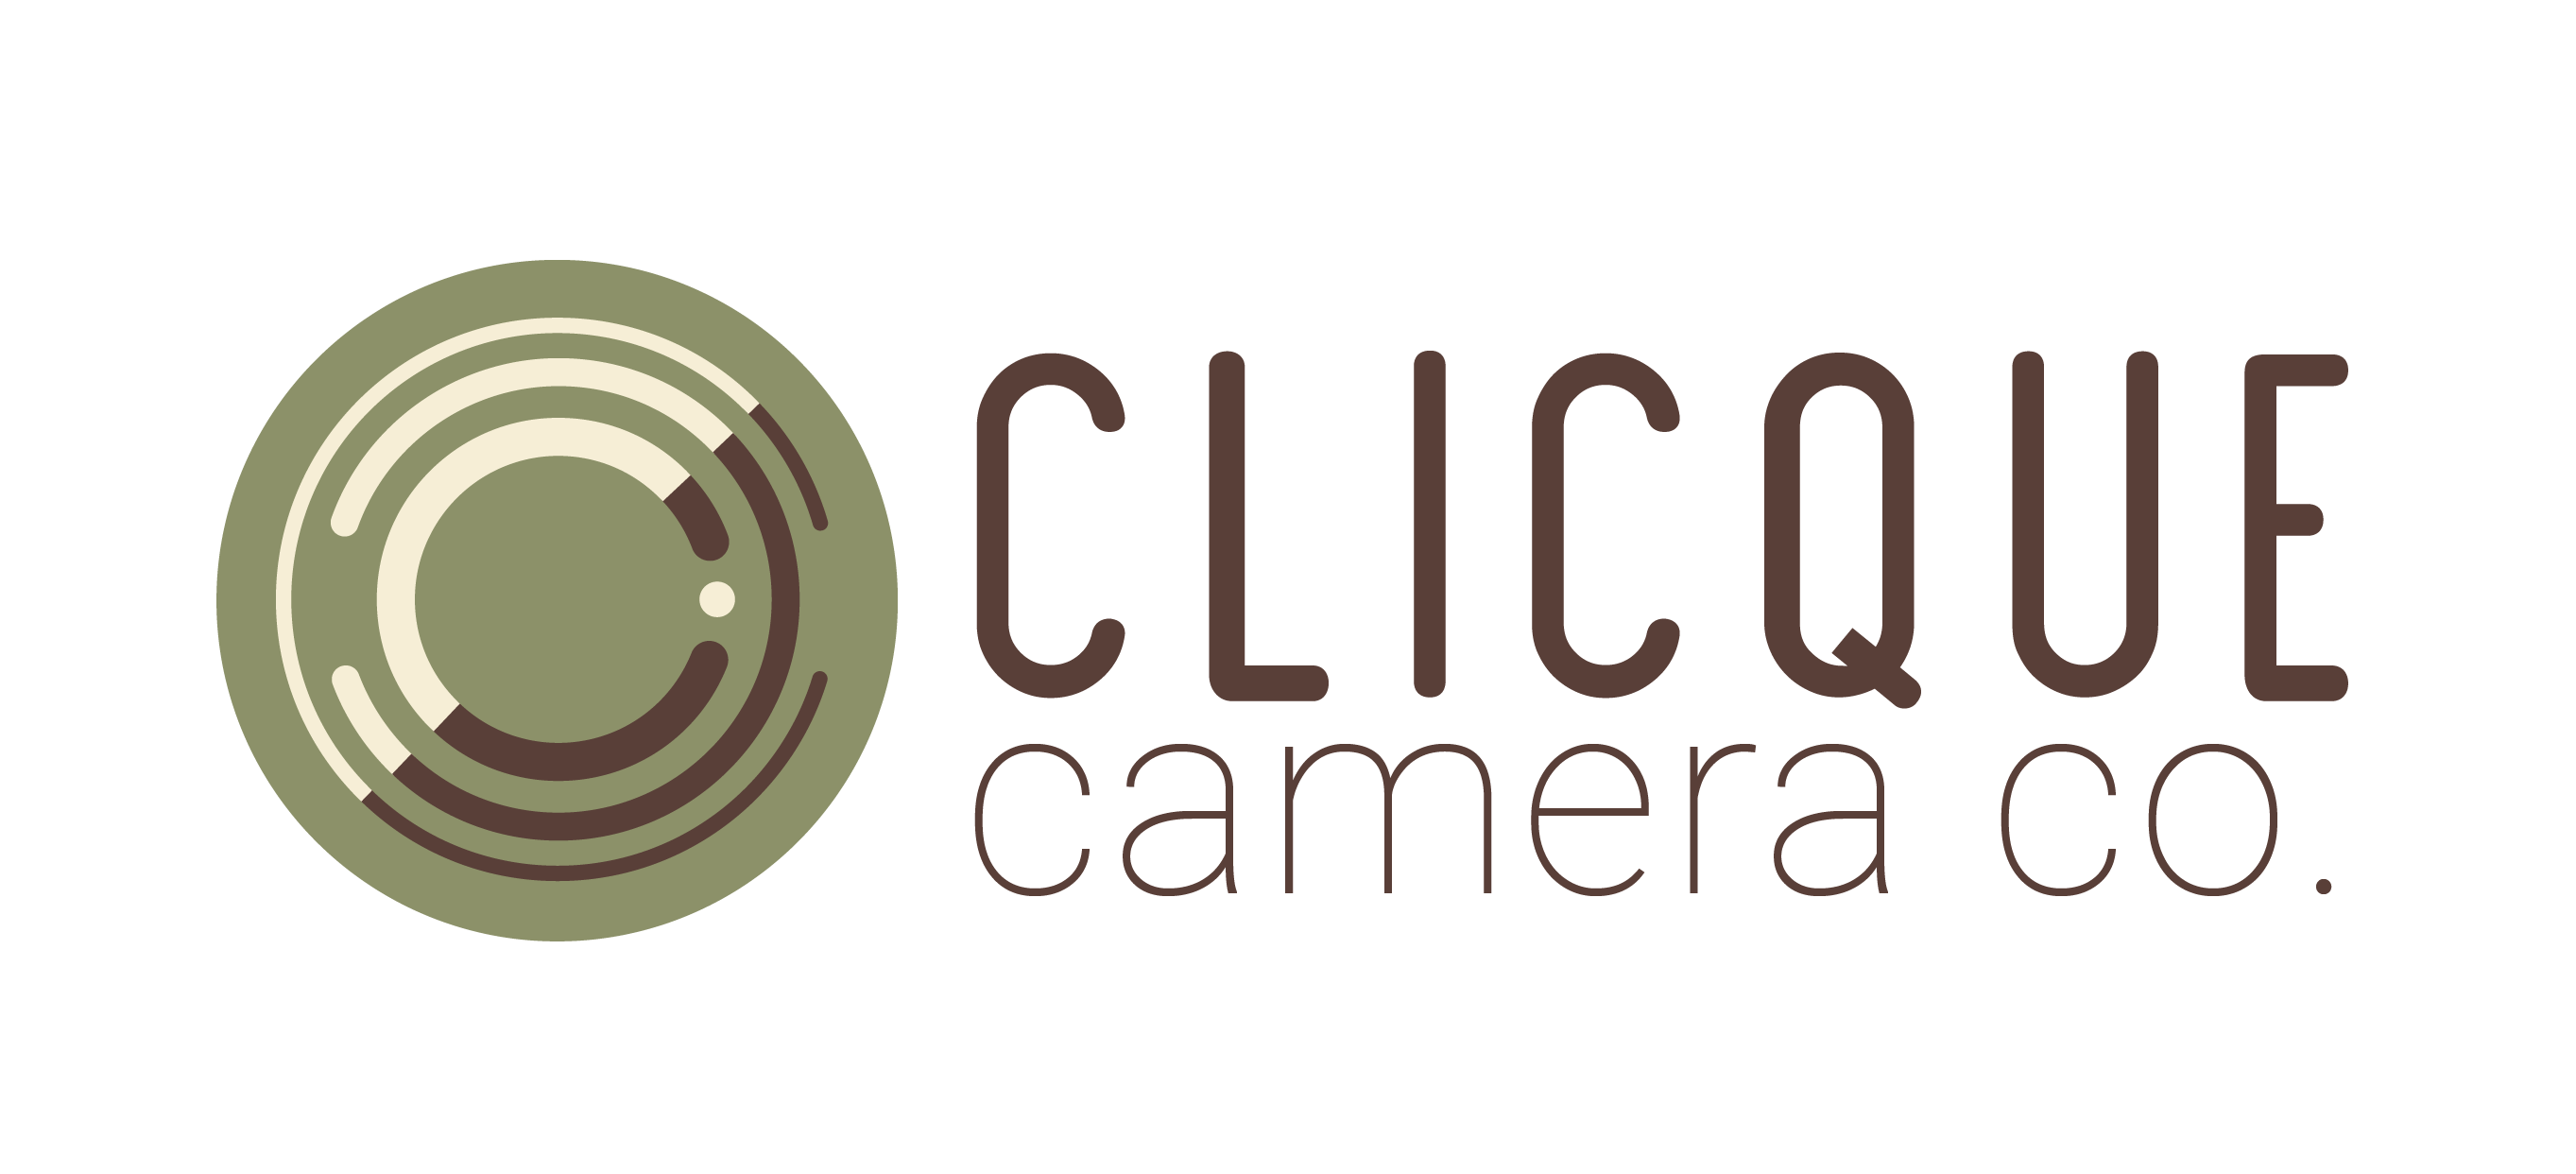 Clicque Camera Co.